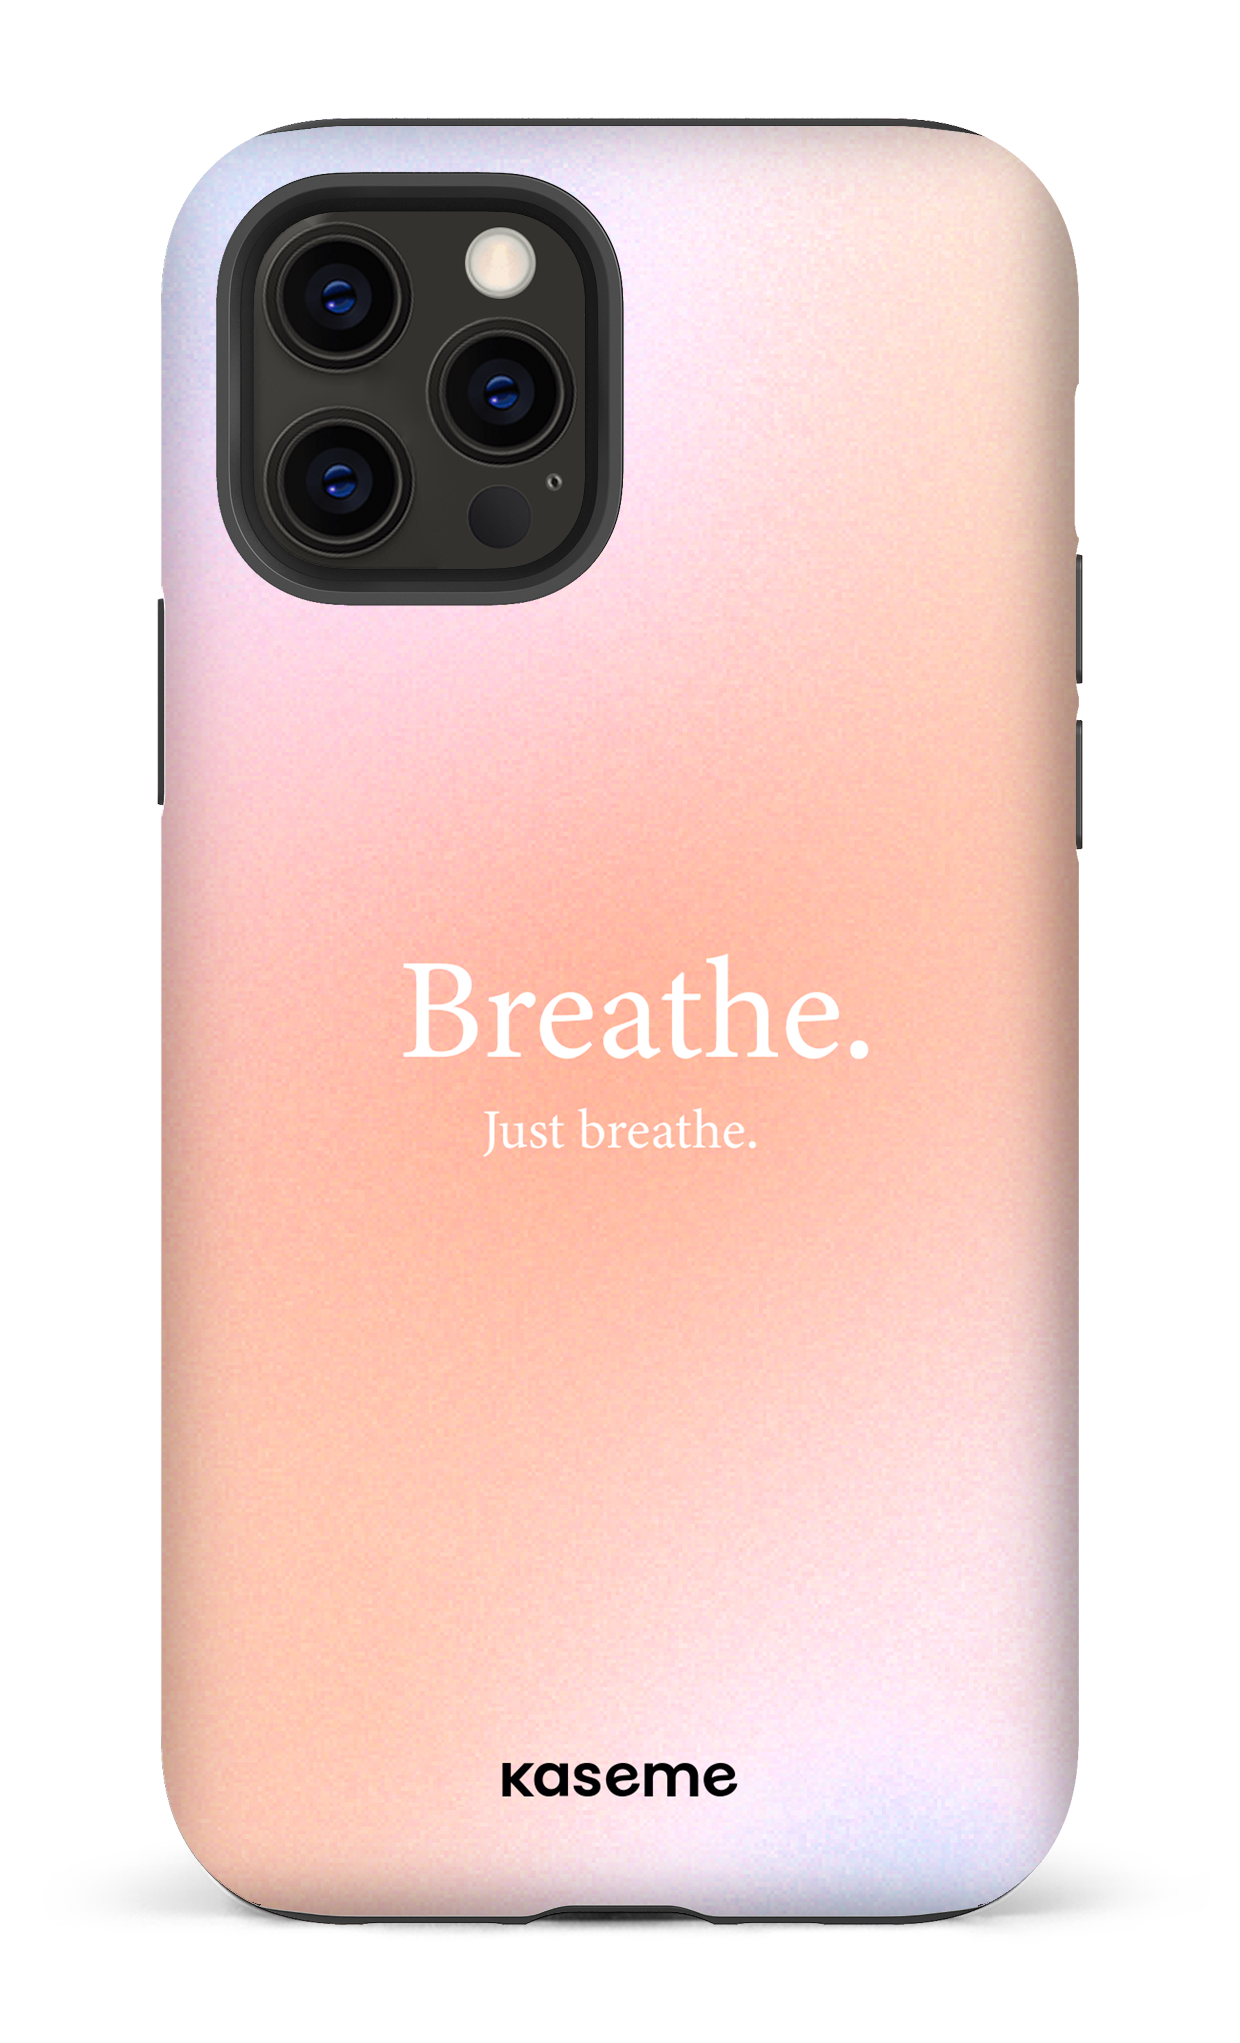 Just breathe - iPhone 12 Pro